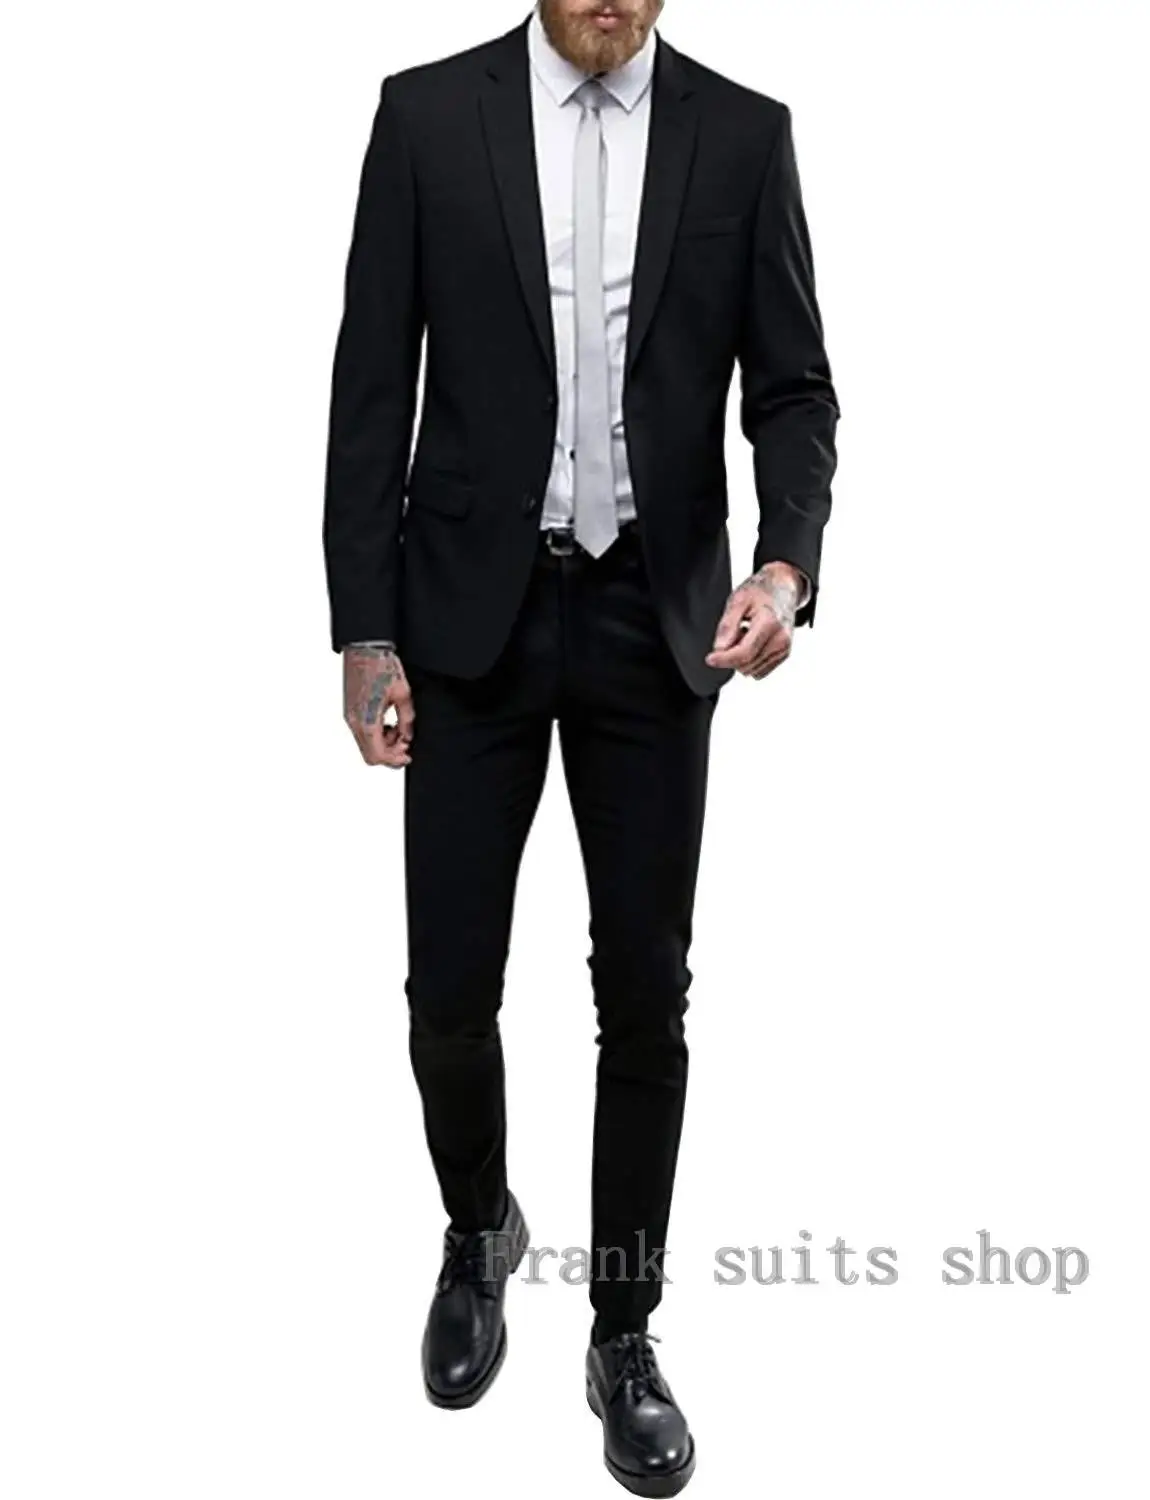 

Black Business Men Suits Custom Made, Bespoke Classic Black Wedding Suits For Men, Tailor Made Groom Suit Tuxedos For Men